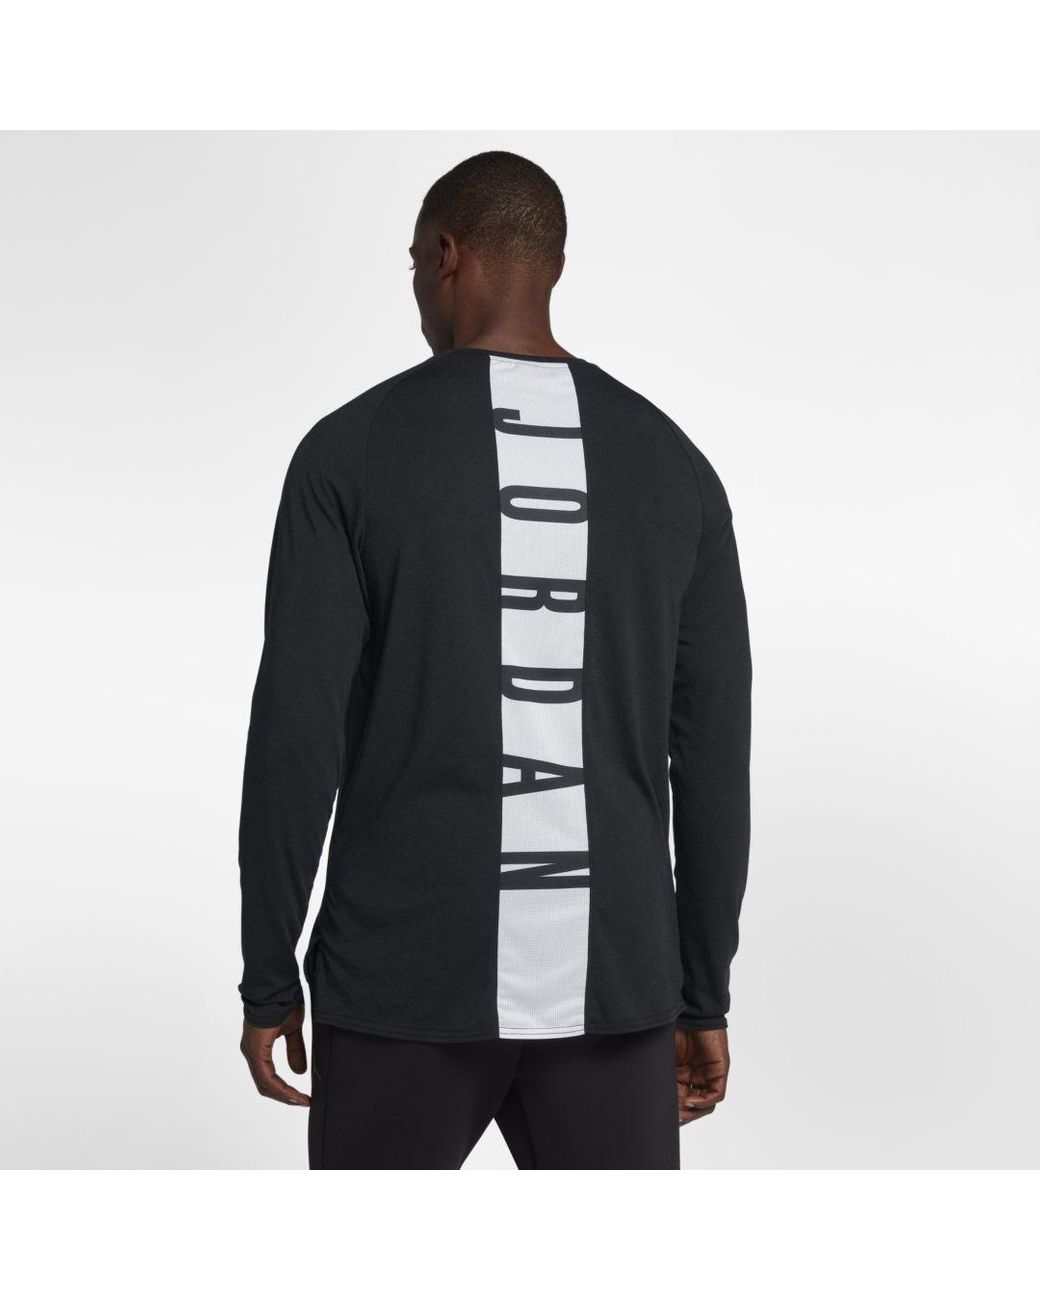 Nike Jordan 23 Alpha Dri-fit Long-sleeve Training Top in Black for Men |  Lyst